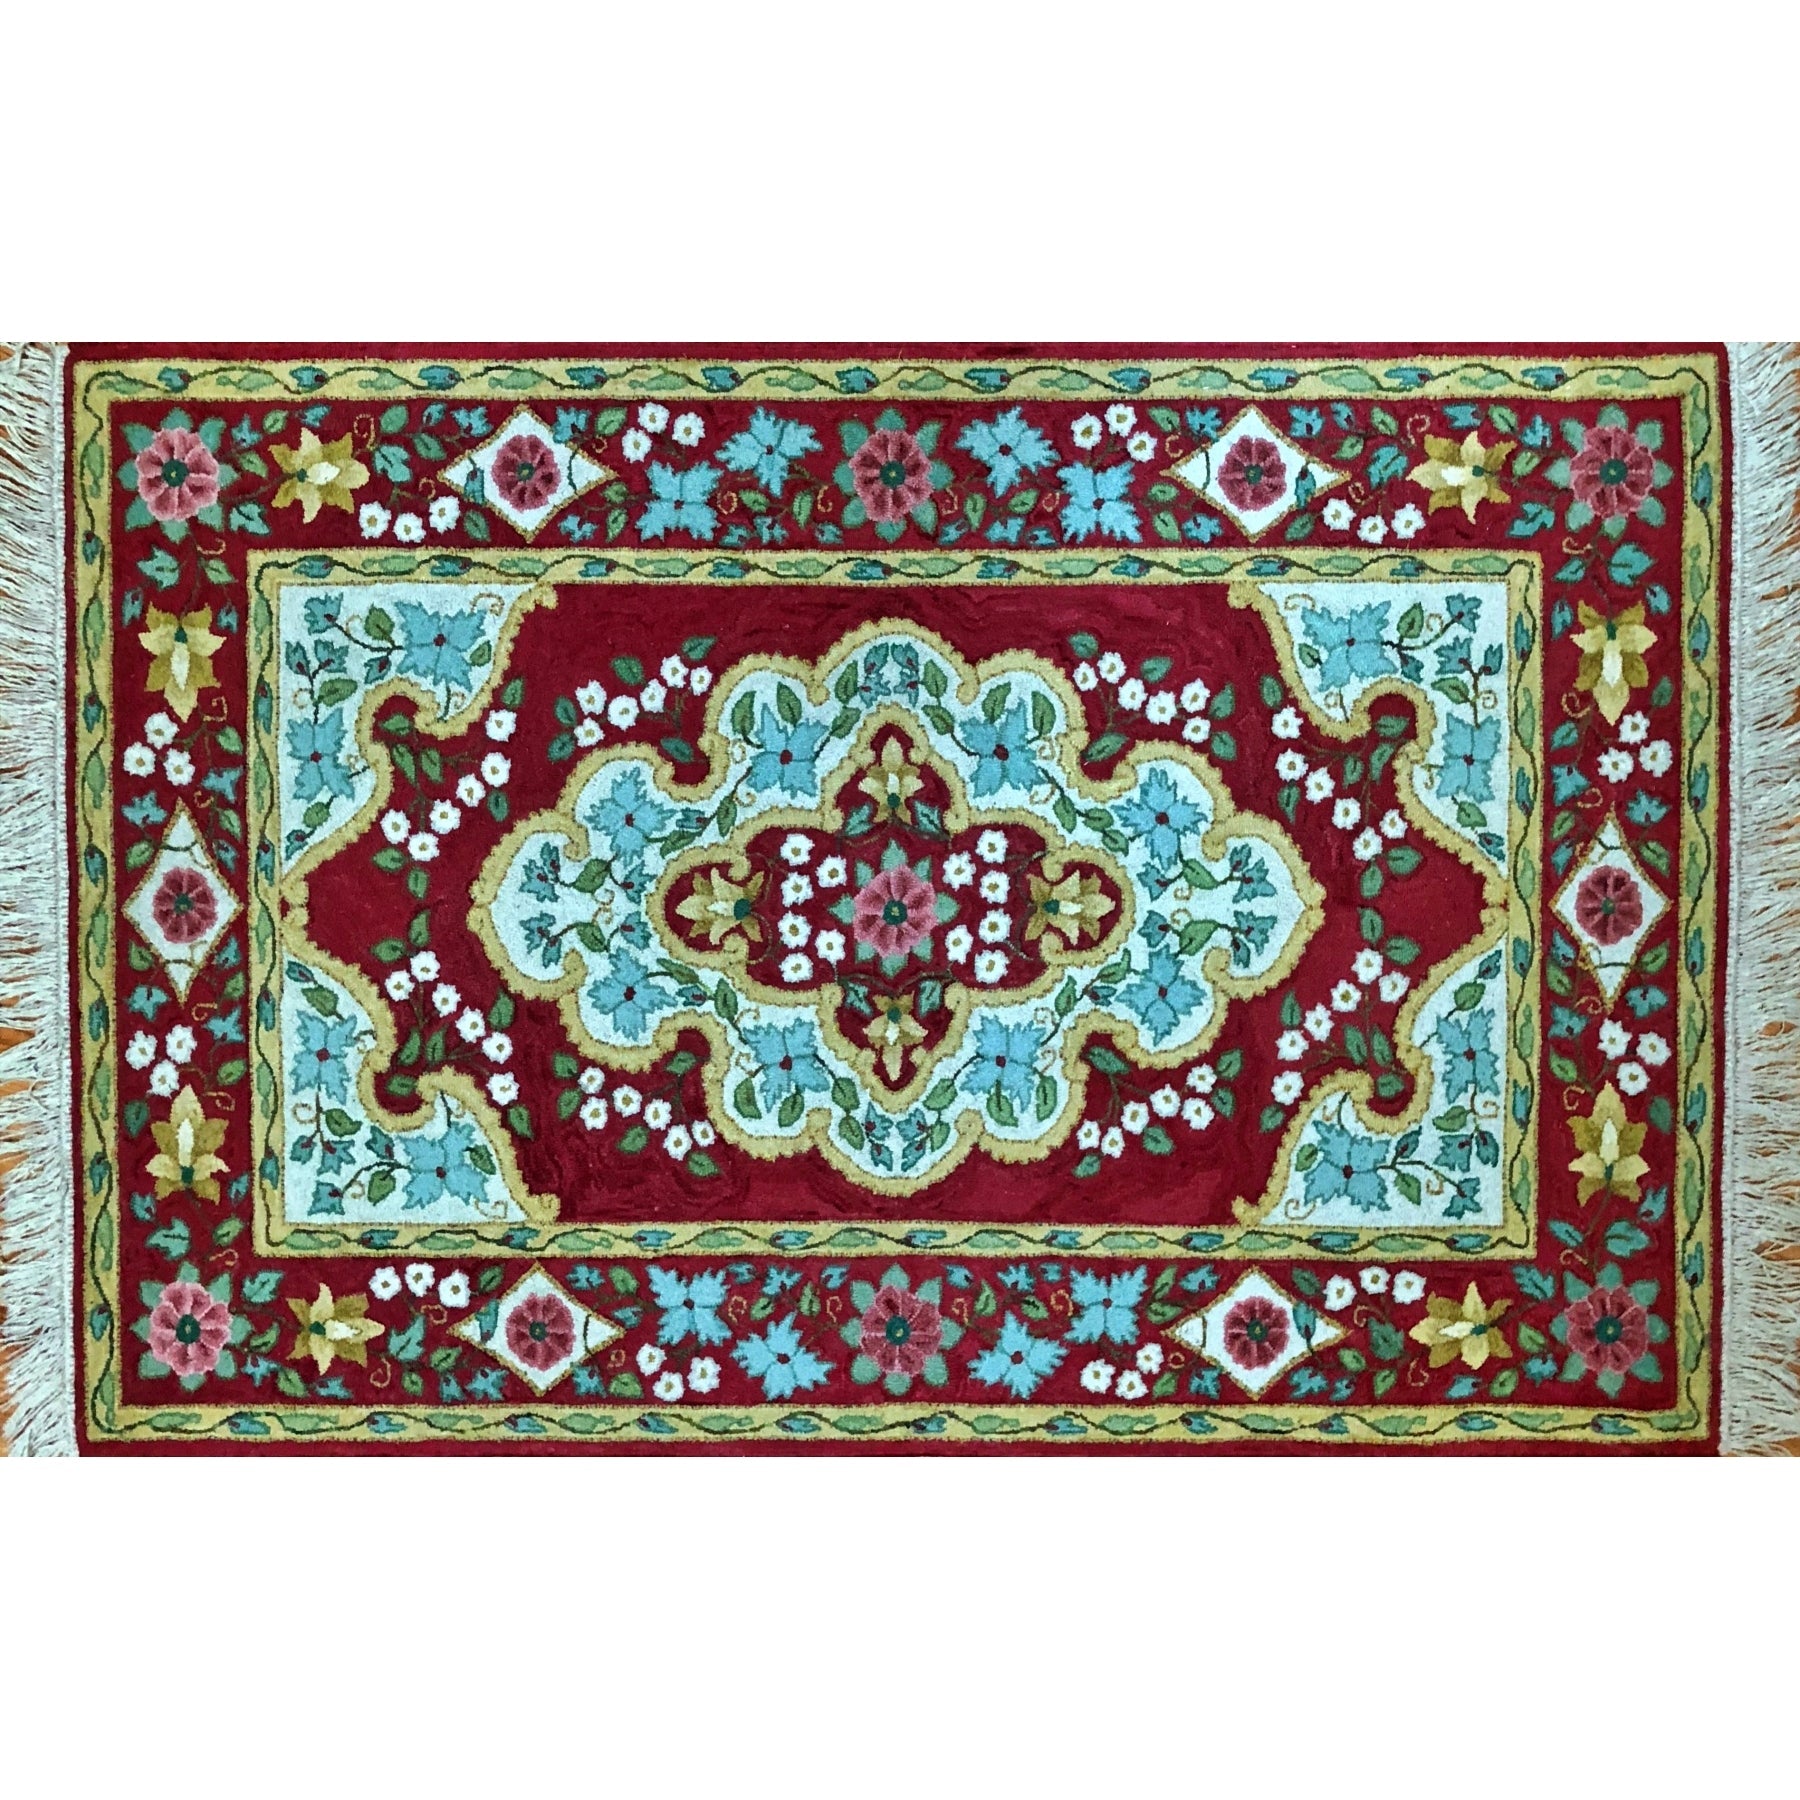 Ali-Riza, rug hooked by Carol LaChance